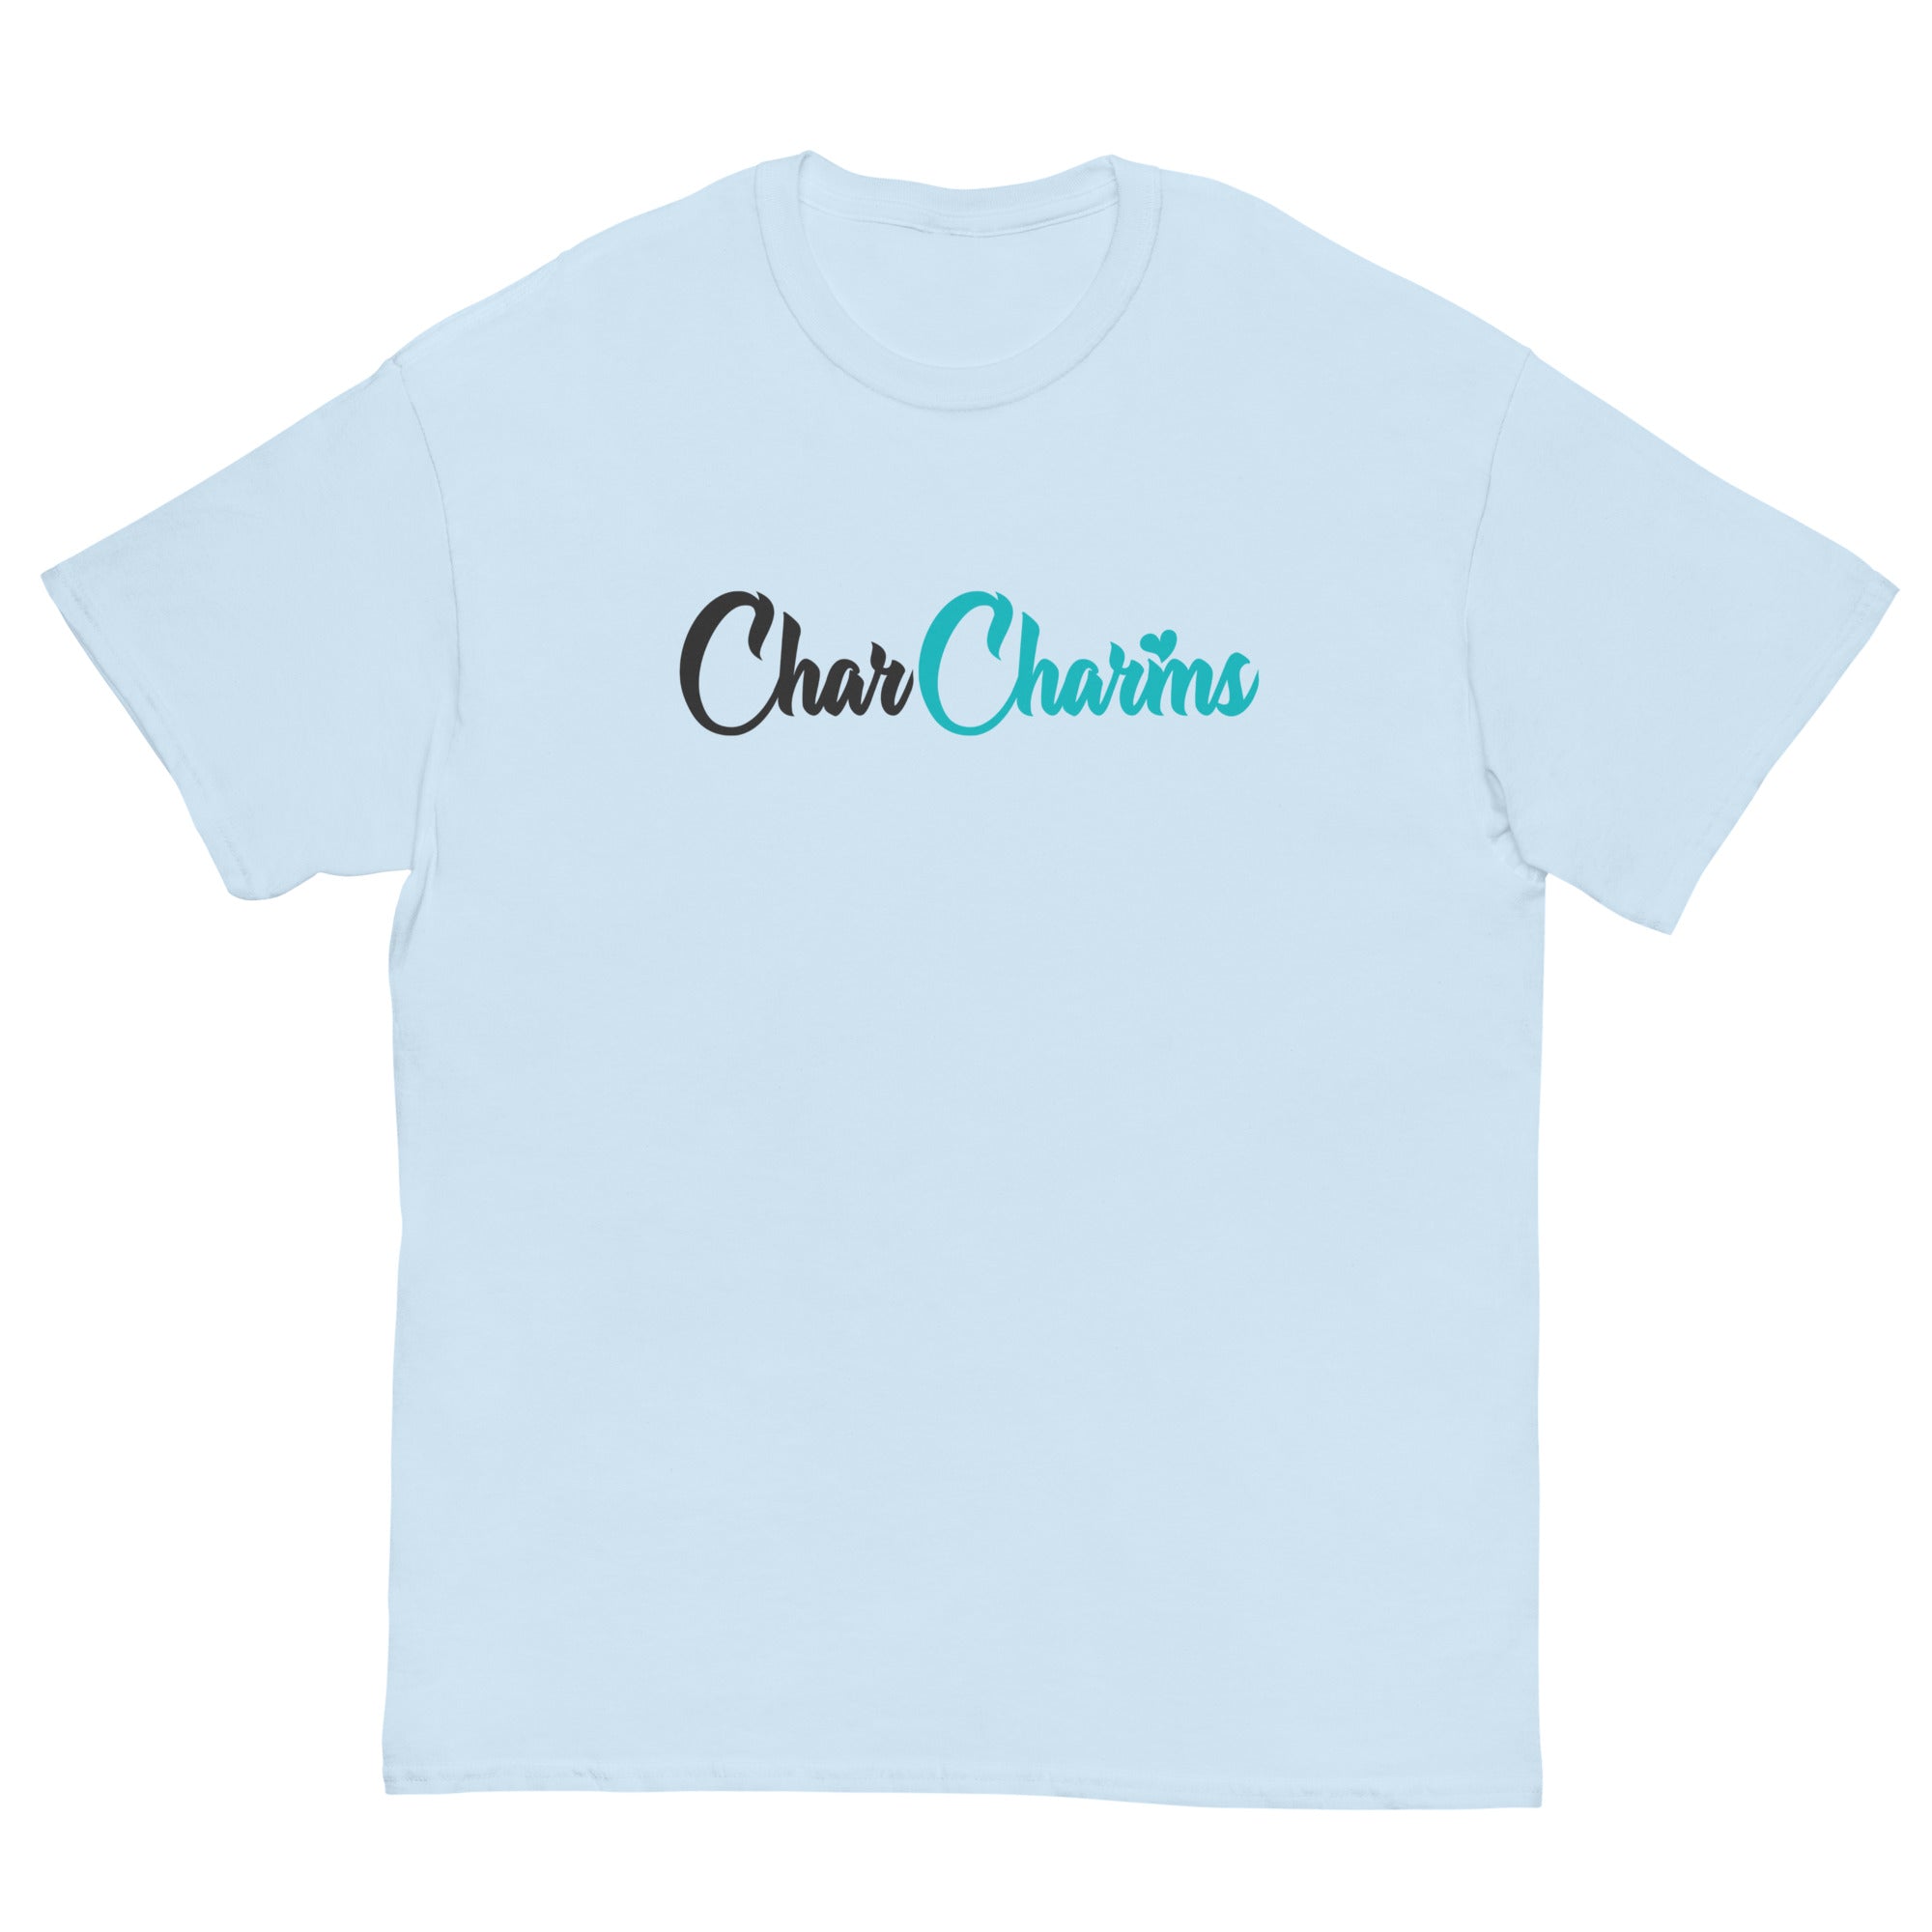 CharCharms Merchandise Classic Tee Tshirt